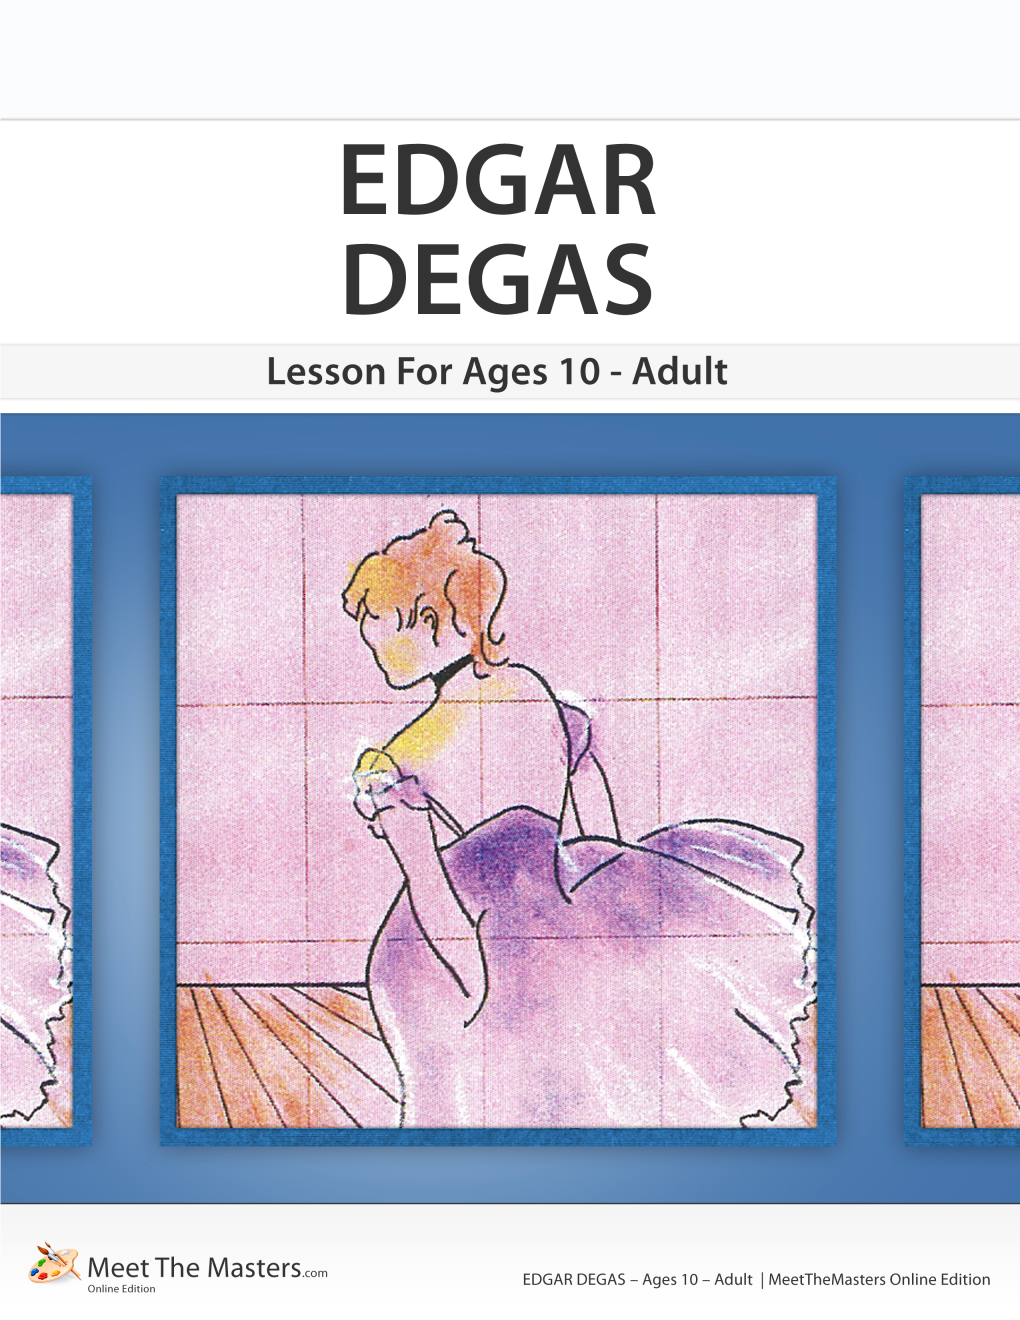 Step 1 - Introducing the Edgar Degas Slideshow Guide